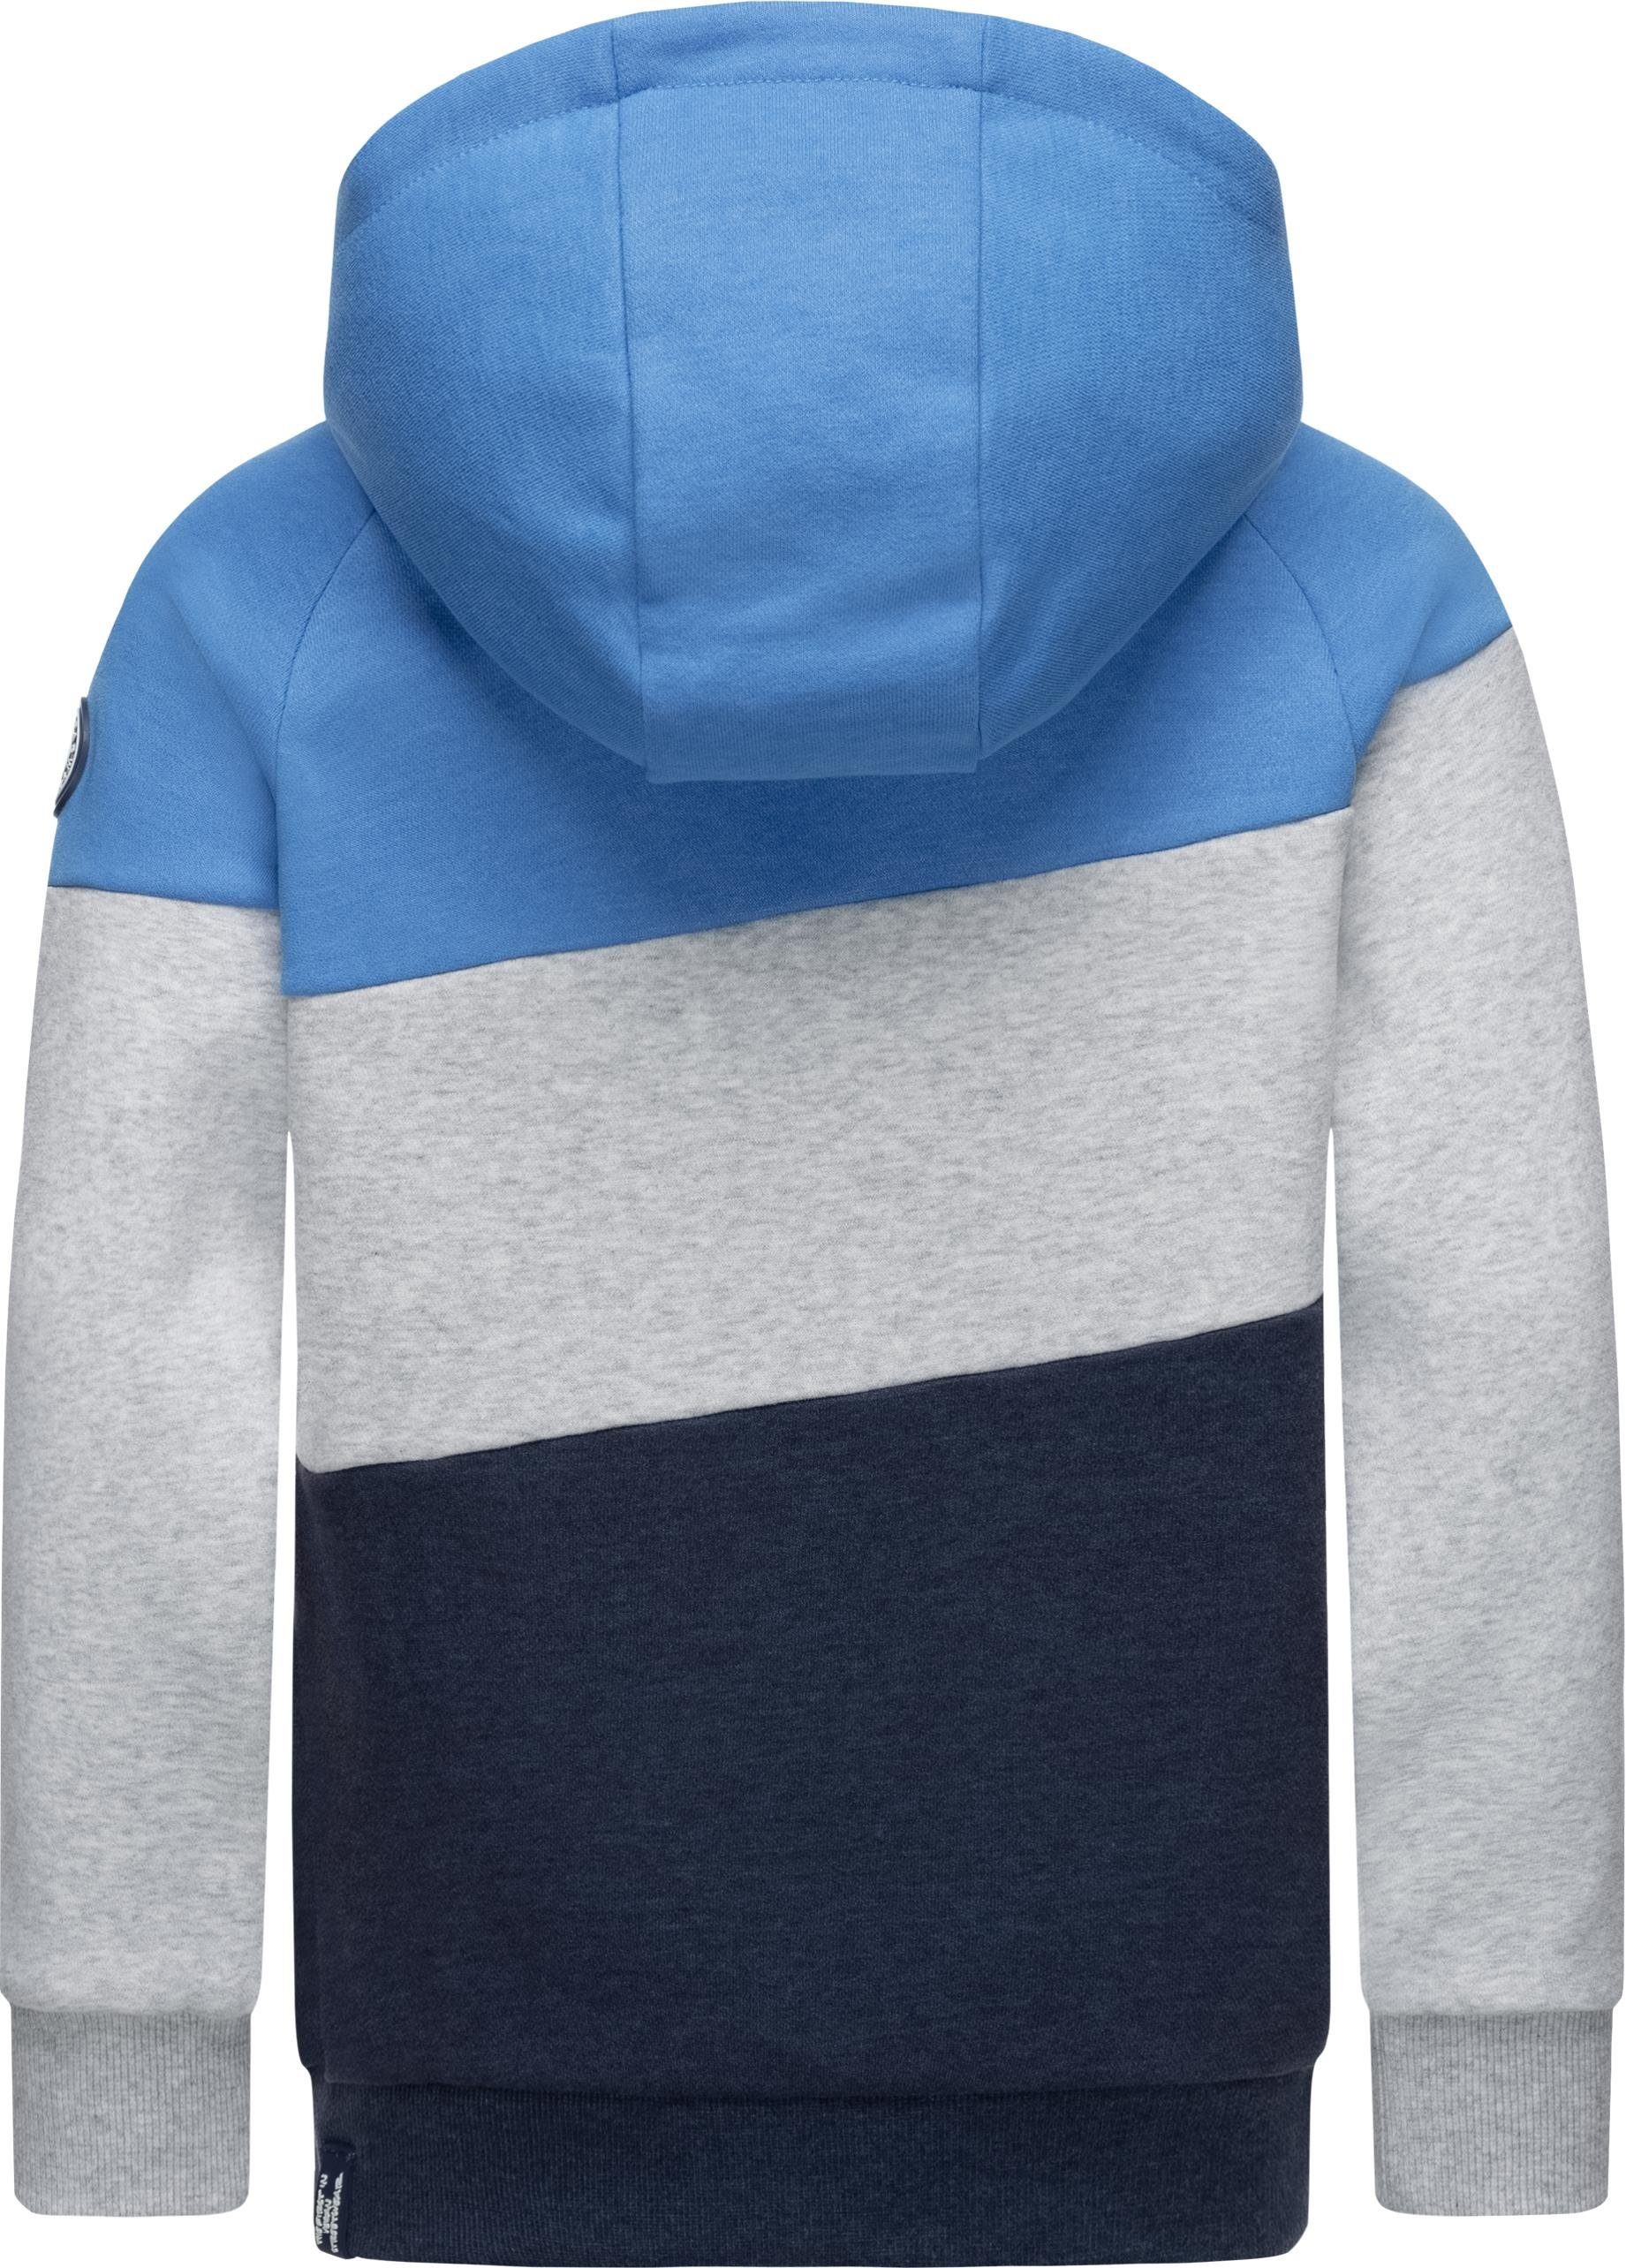 Kinder Ragwear Kapuzensweater Kapuze großer Vendio blau mit Kapuzenpullover Jungen